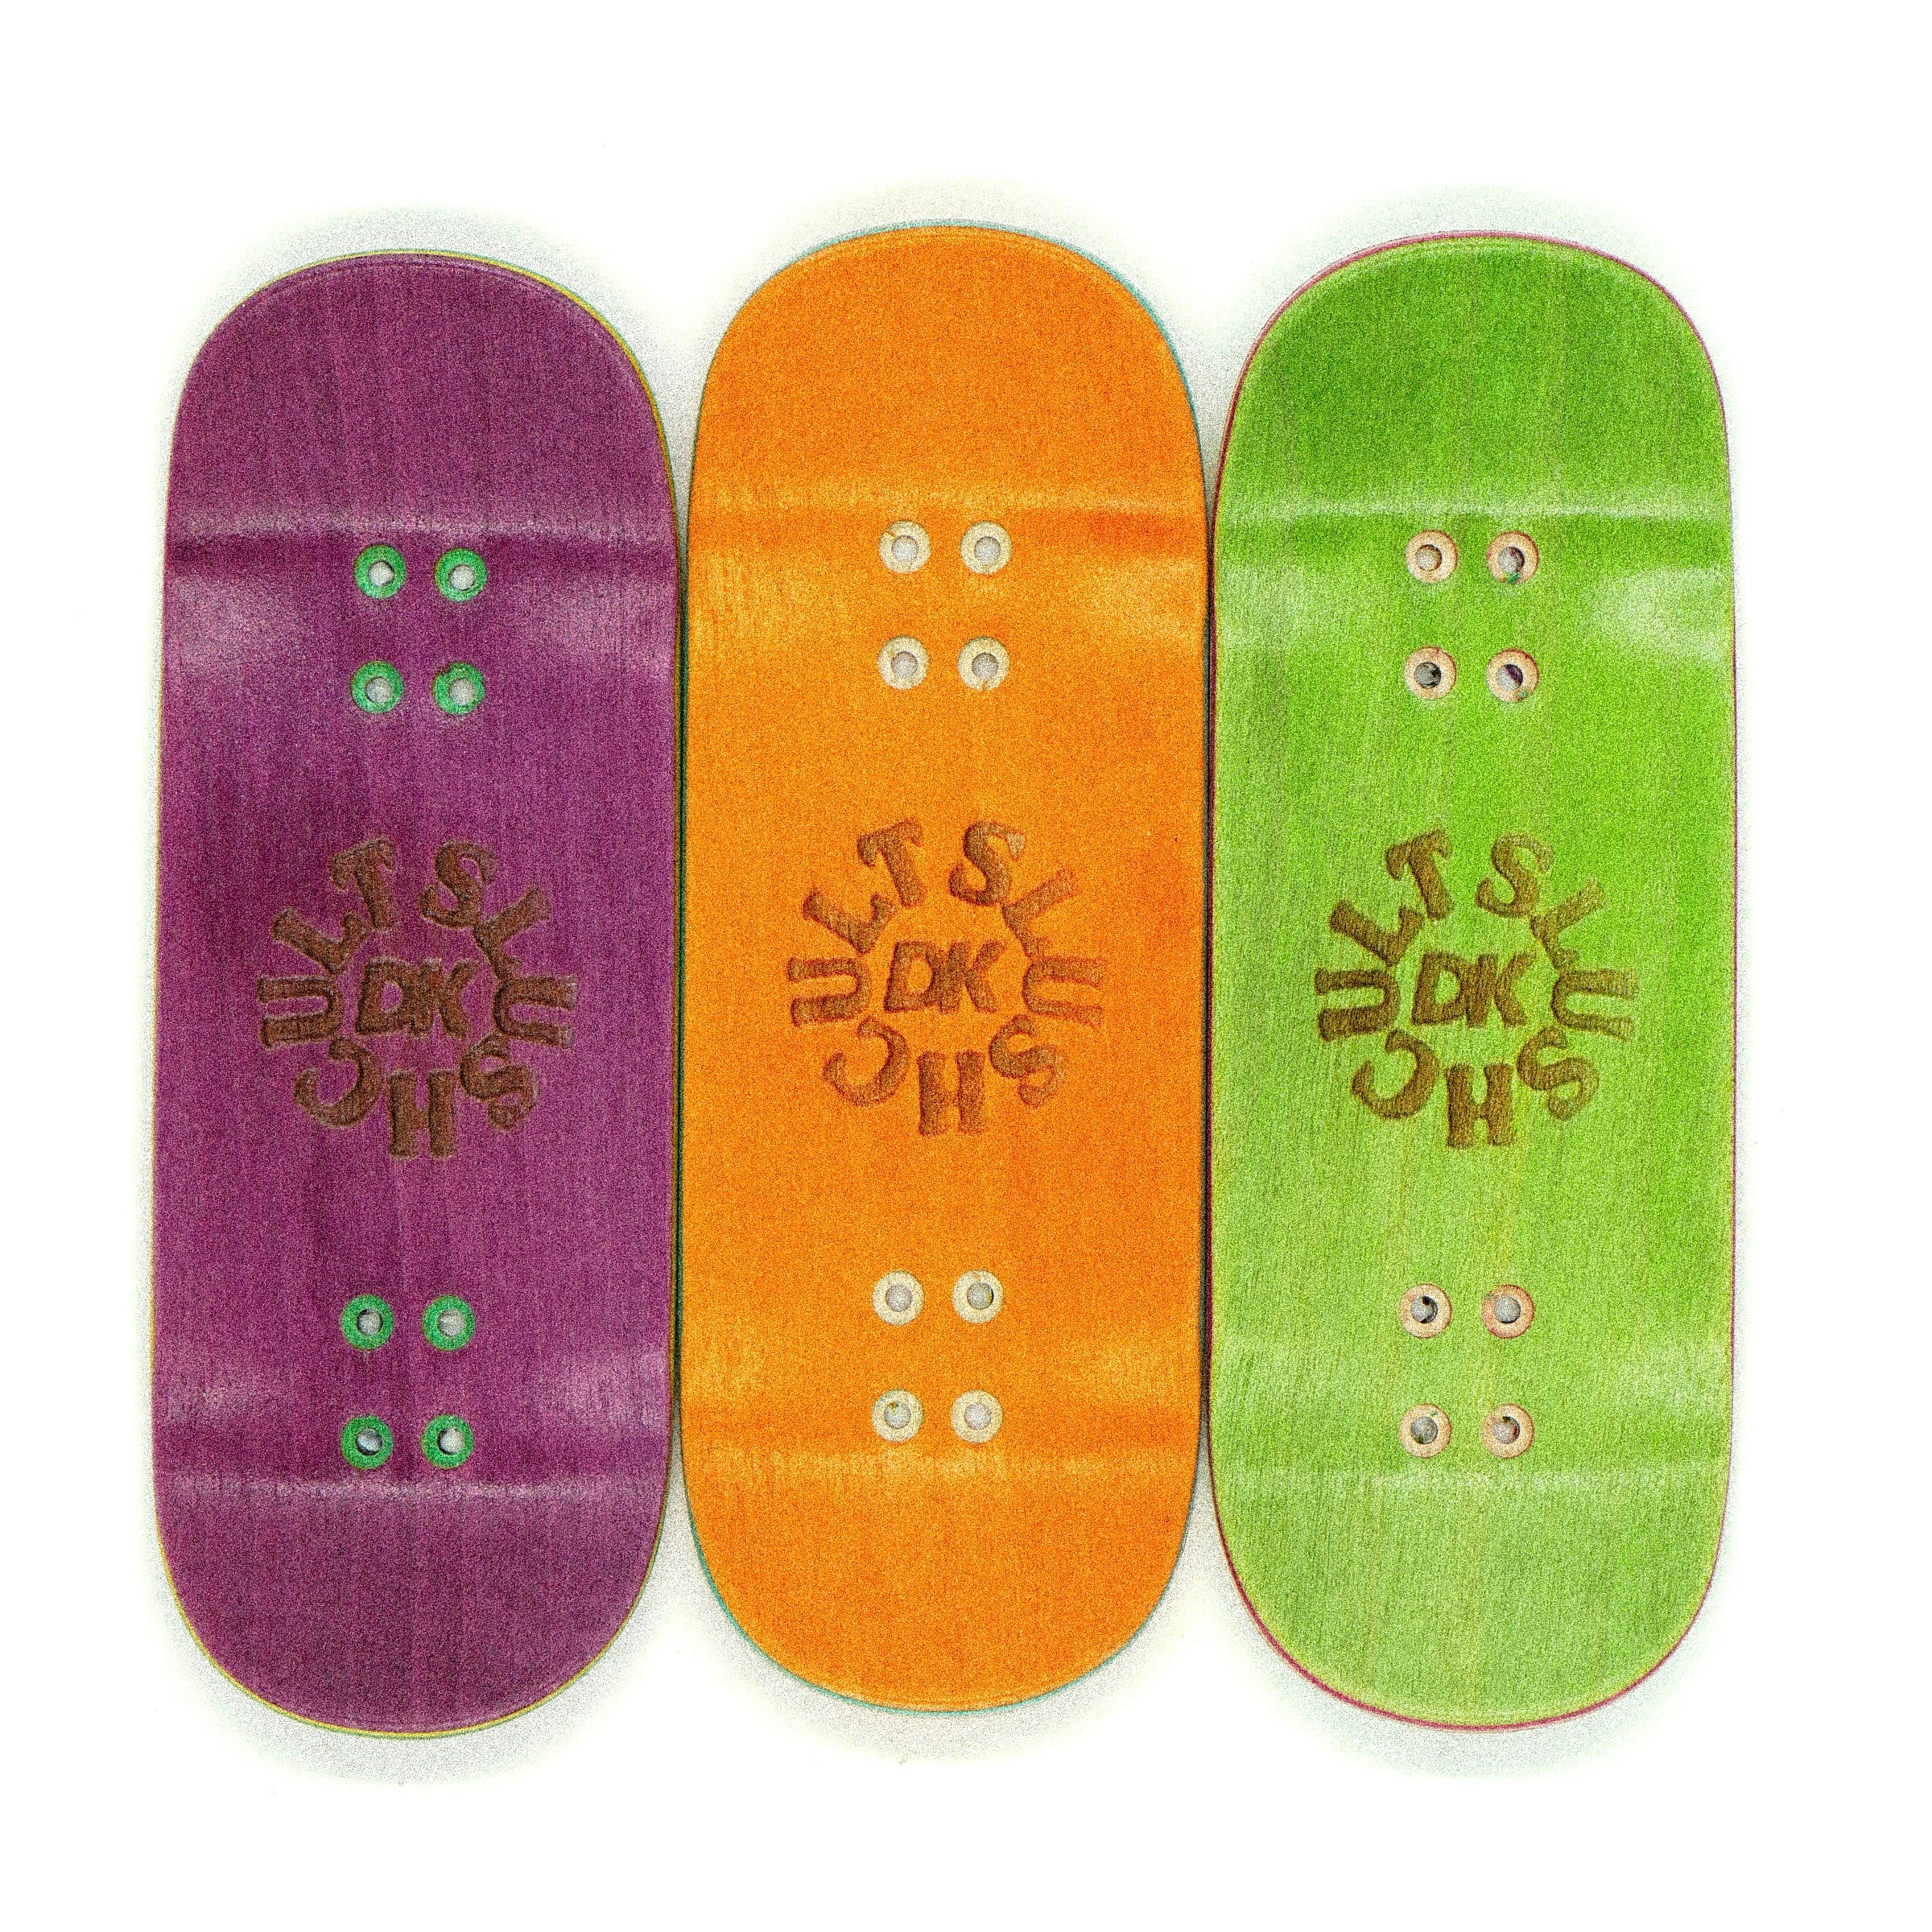 Slushcult "Freaking Amazing V3" Shop Fingerboard Deck (Purple Plies) MINI Skate Shop Slushcult    Slushcult